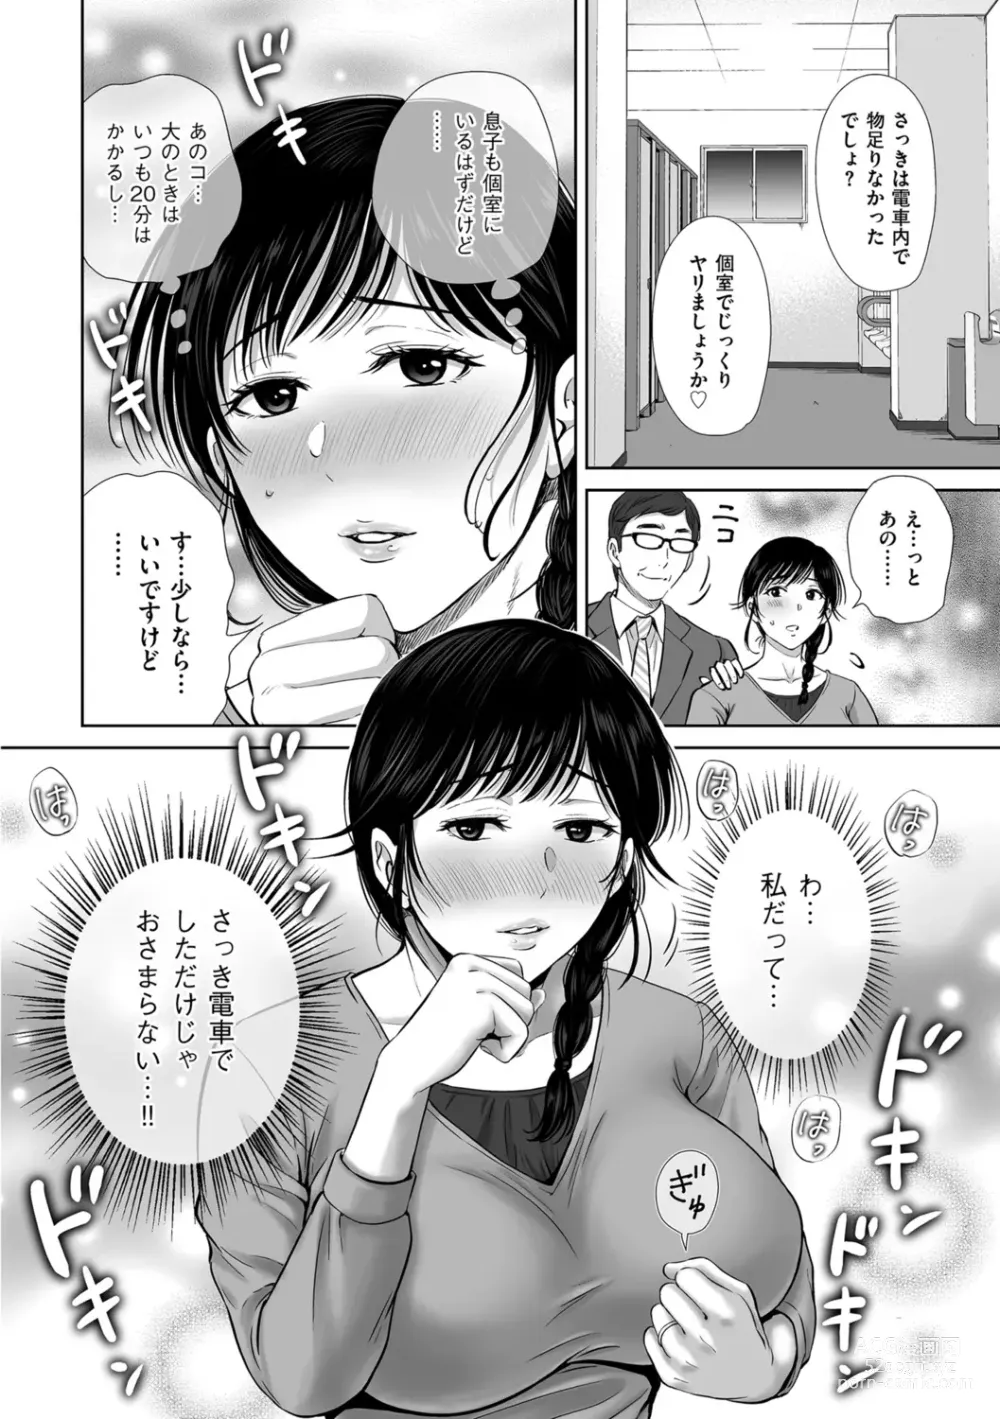 Page 24 of manga Mesuzakari no Haha-tachi e